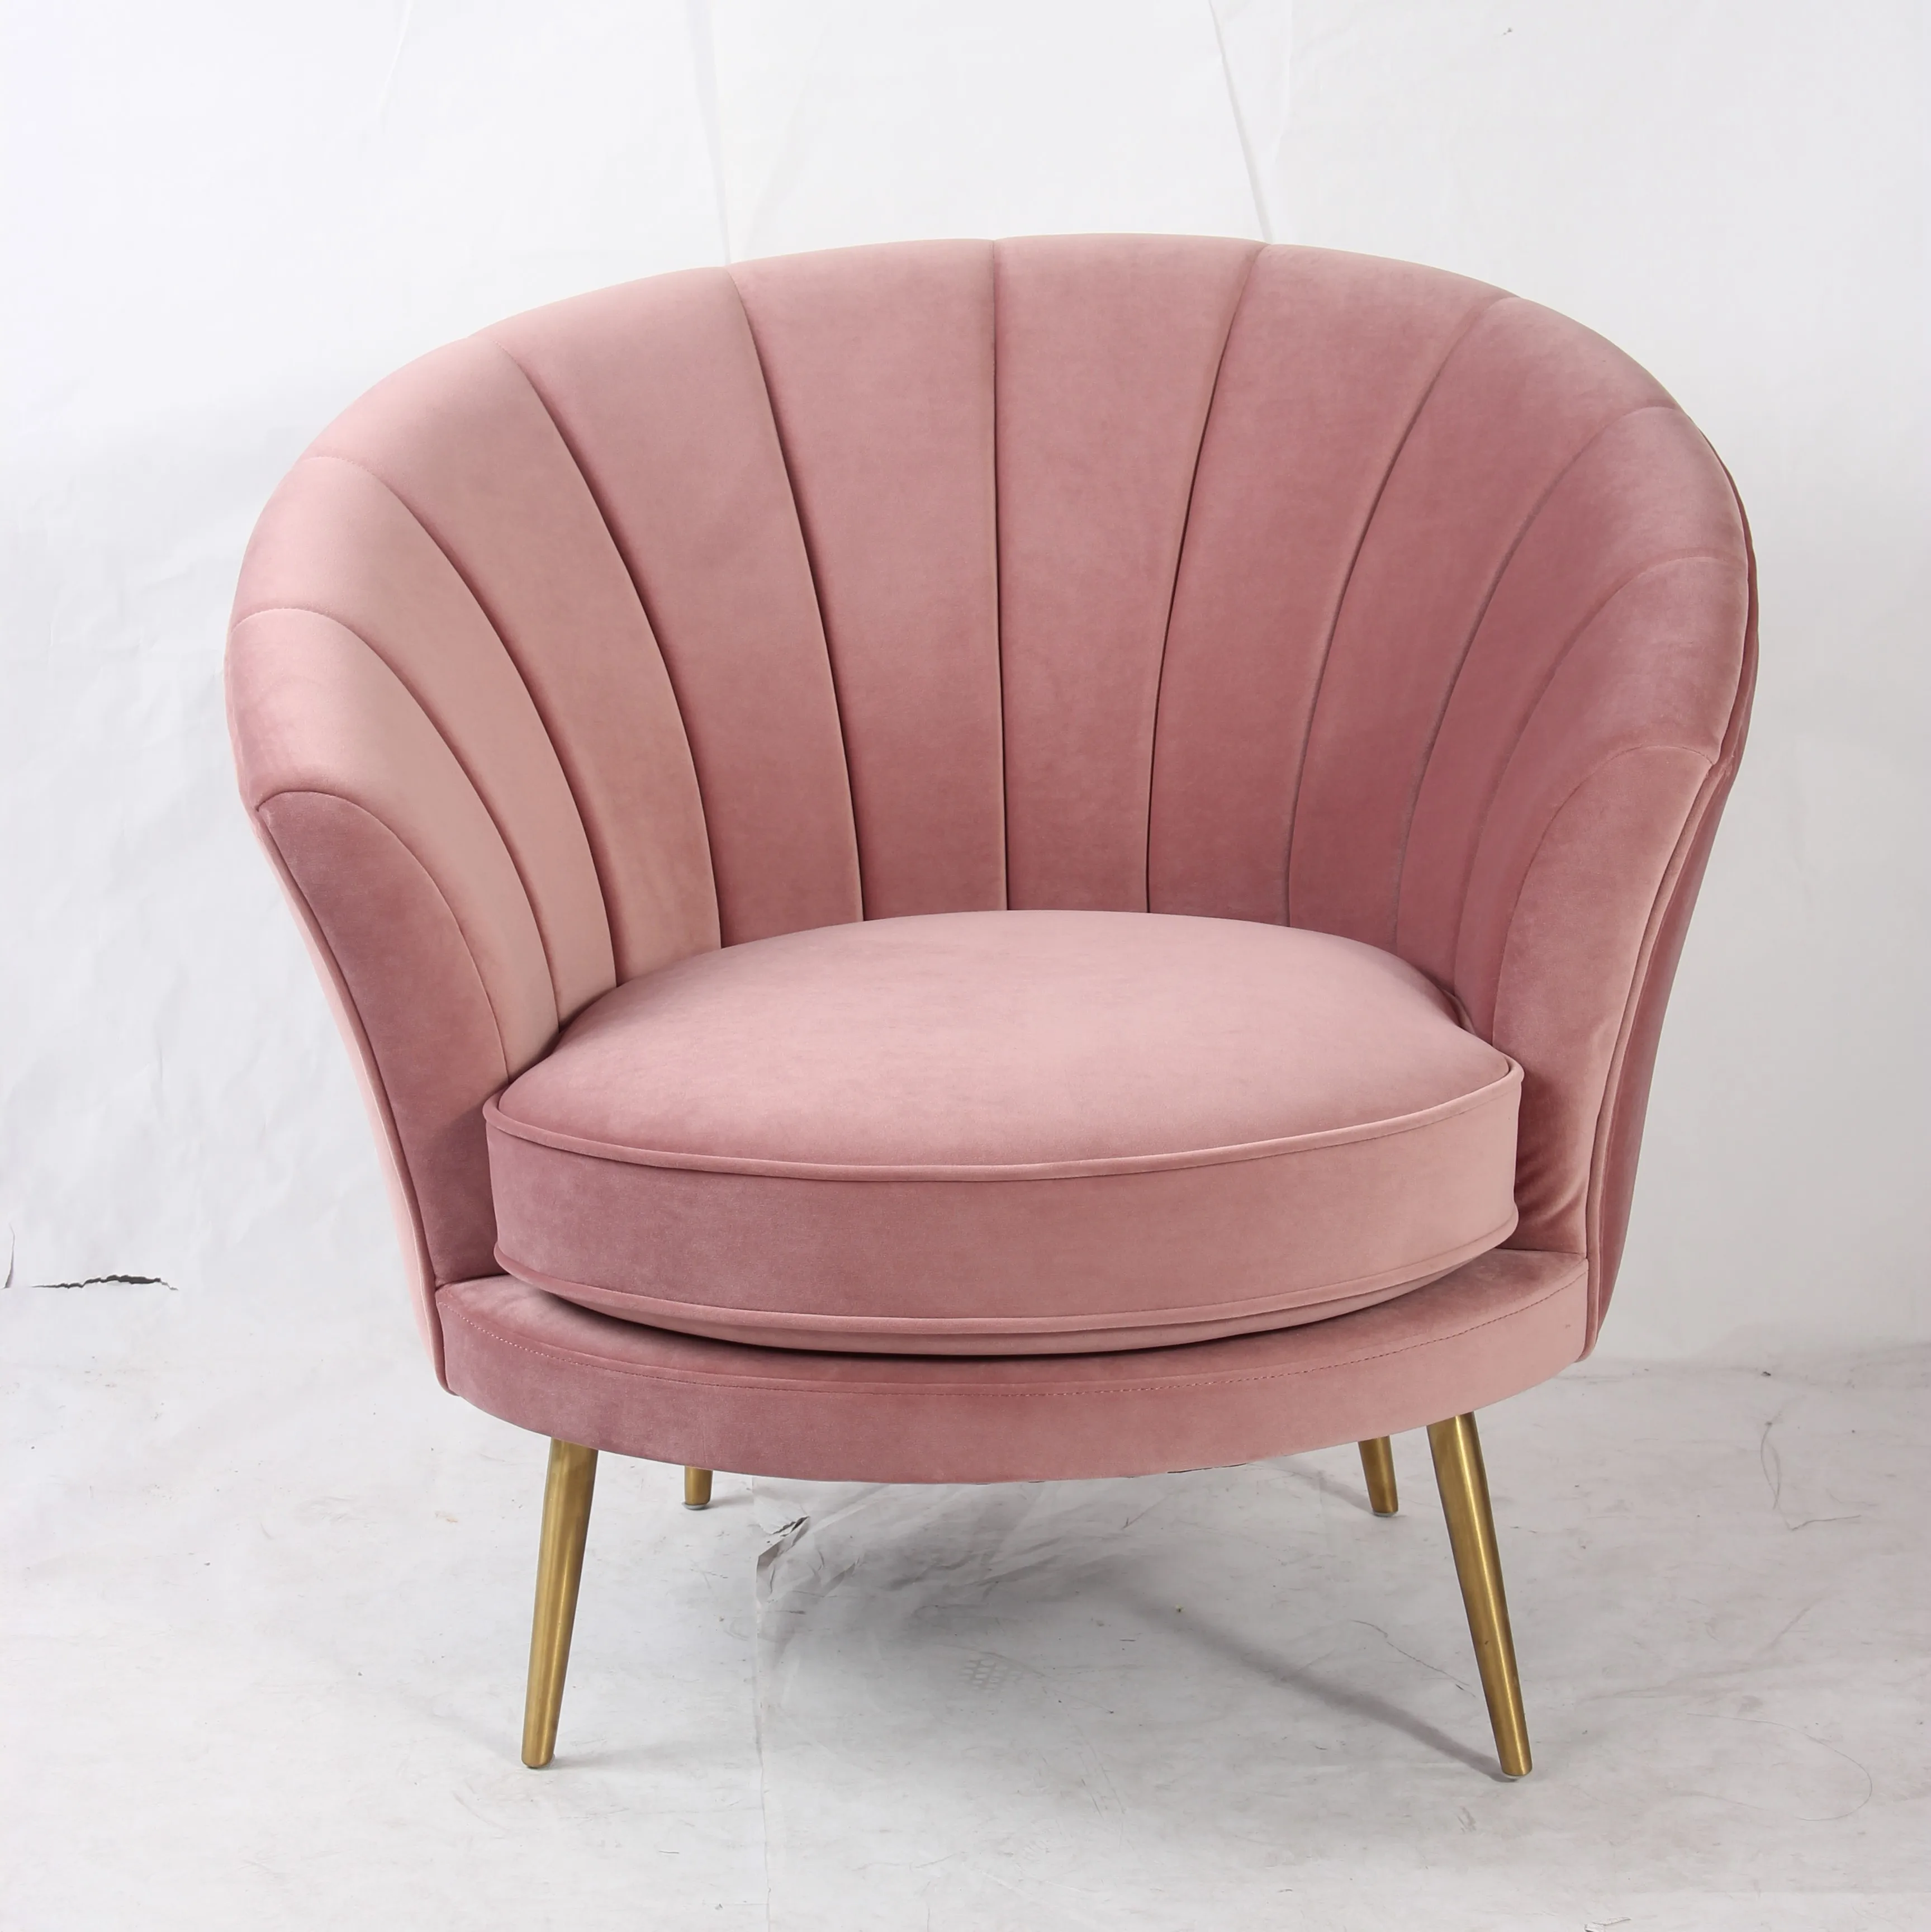 European Design Single Sofa Chair,Tufed Back 1 Seater